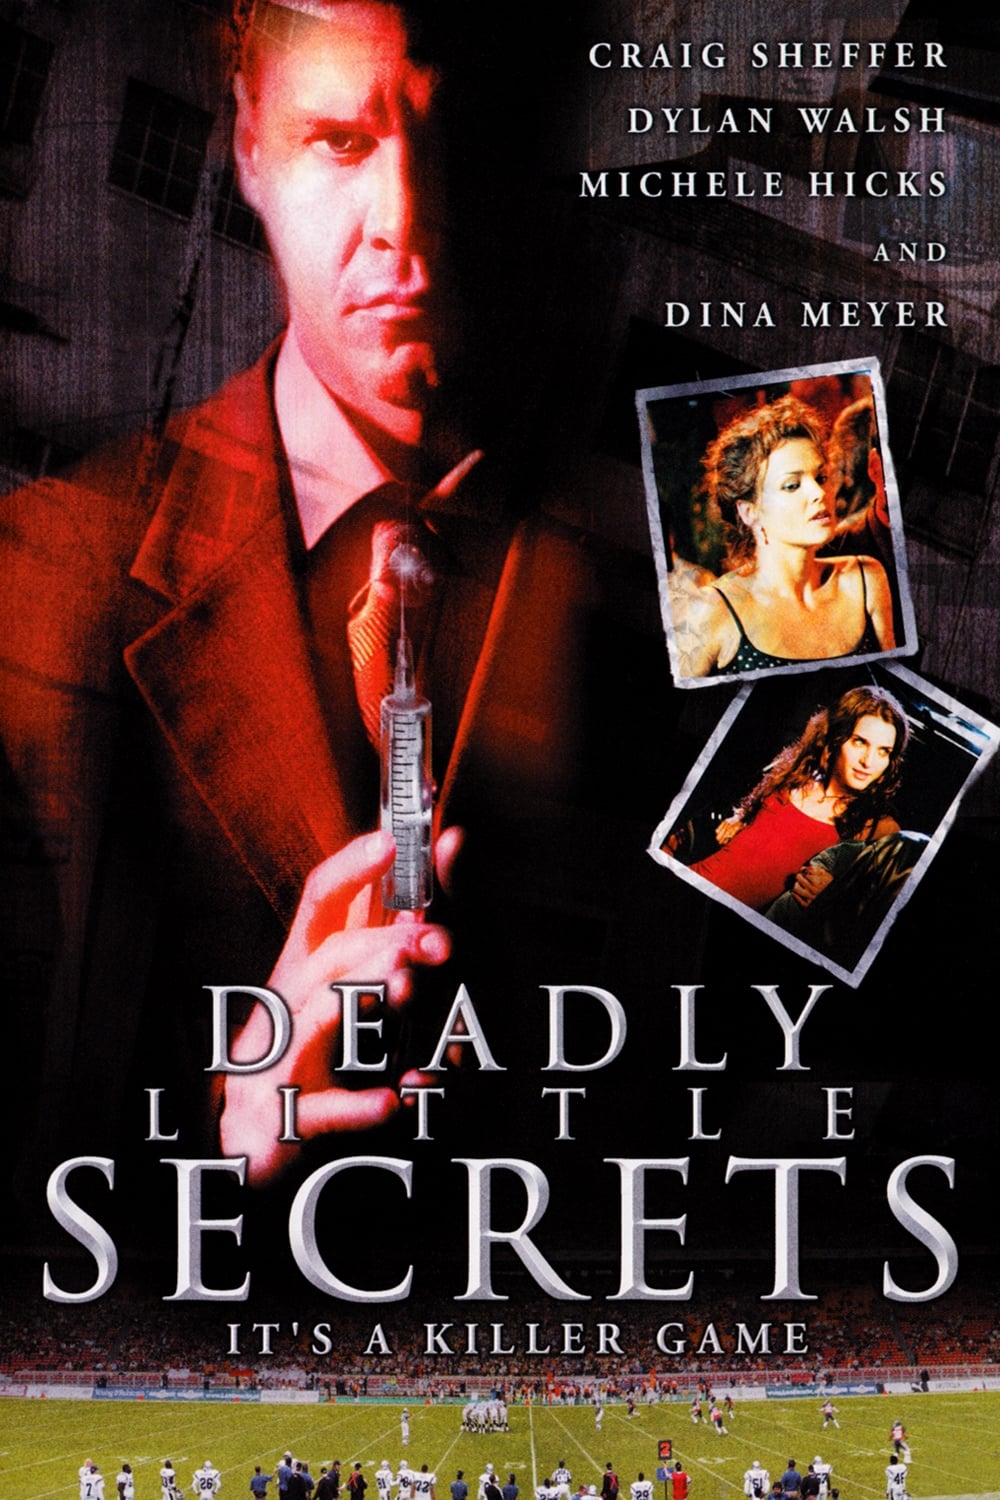 Deadly Little Secrets (2002)